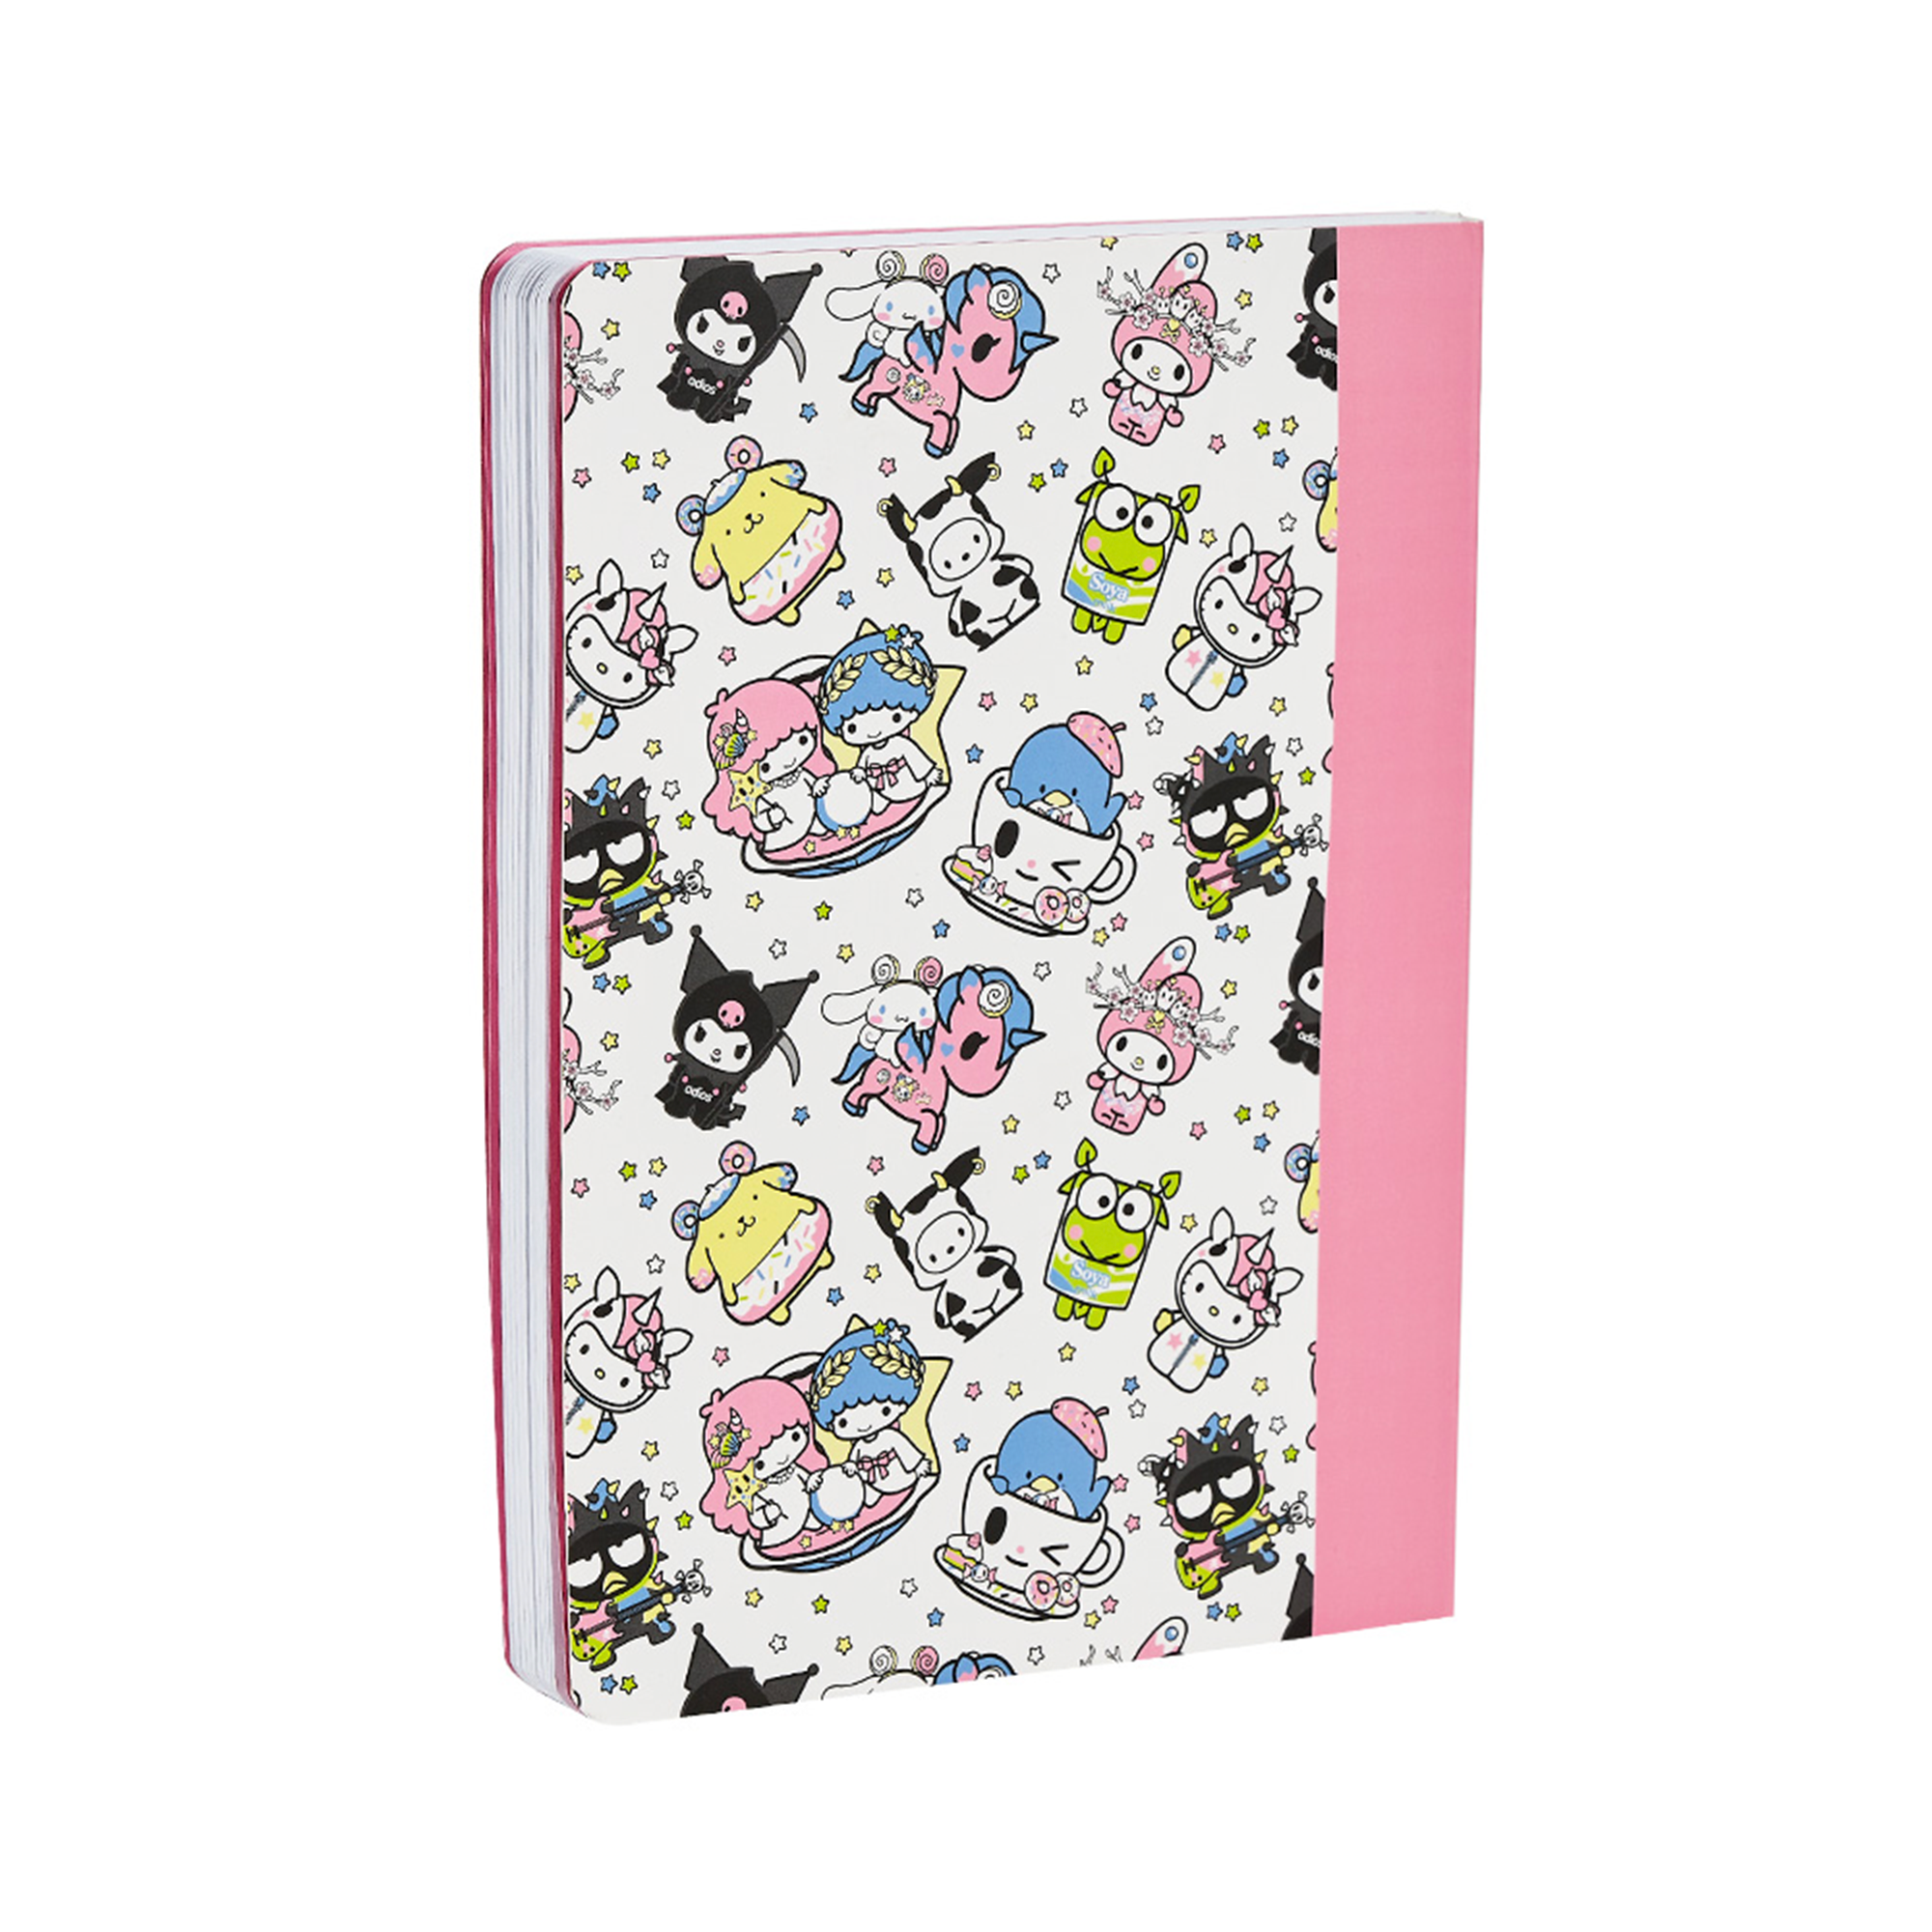 Tokidoki x Hello Kitty and Friends Notebook Stationery TOKIDOKI   